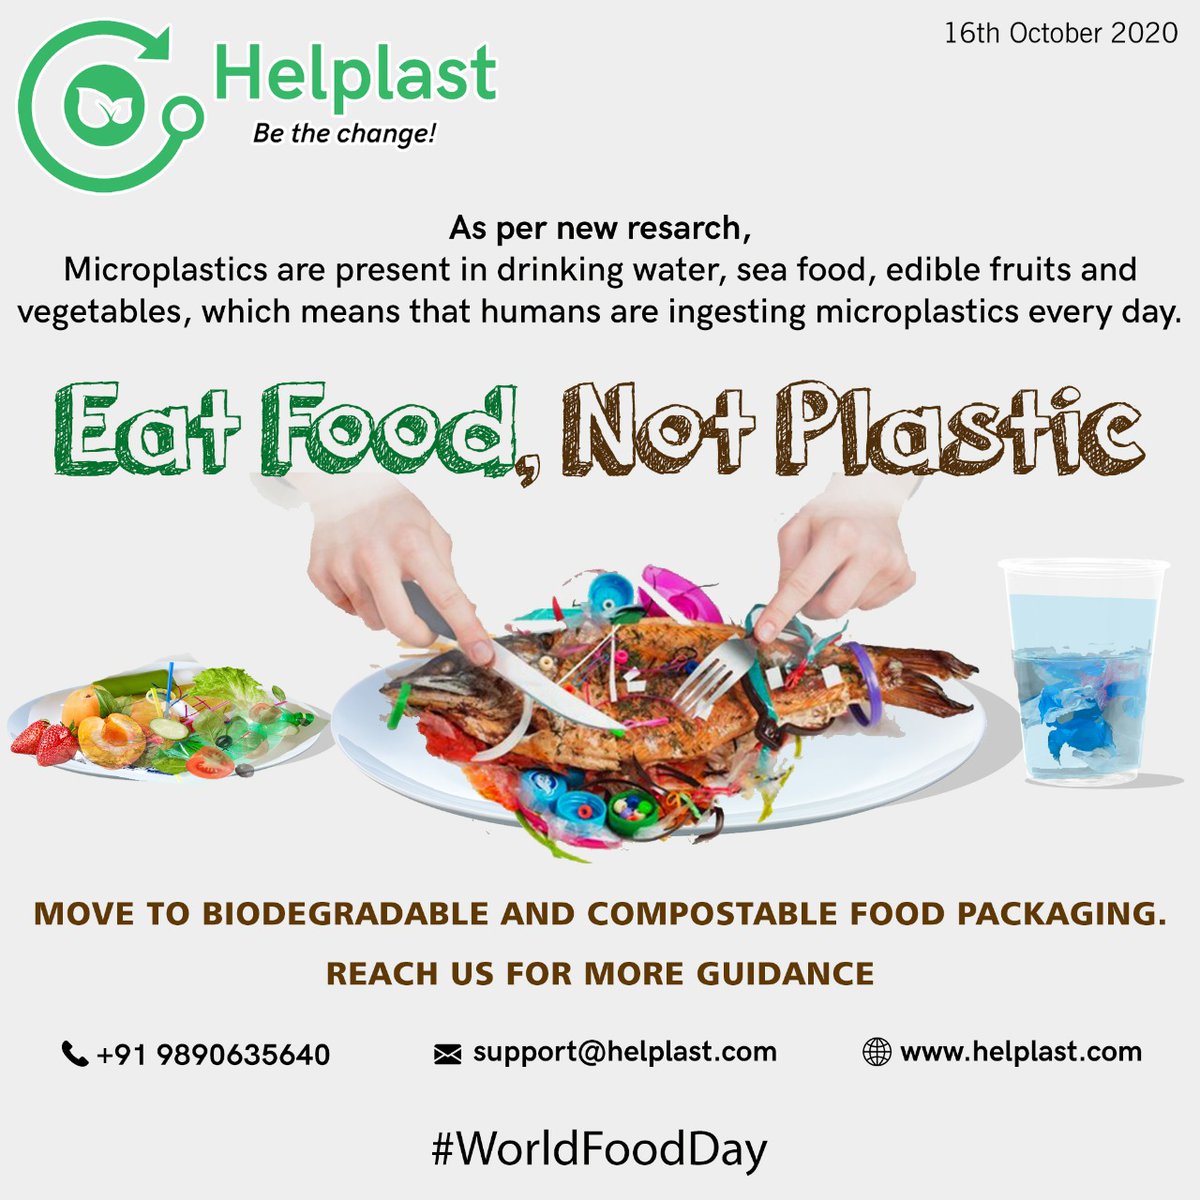 Eat food, Not plastic. 

#ecofriendly #Foodgrade #zerowaste #gogreen #noplastic #biomaterials #sustainability #biodesign #organic #materialresearch #Helplast #Biodegradable #sustainable #plasticfree #circulardesign #ecofriendlyproducts #biofabrication #saynotoplastic